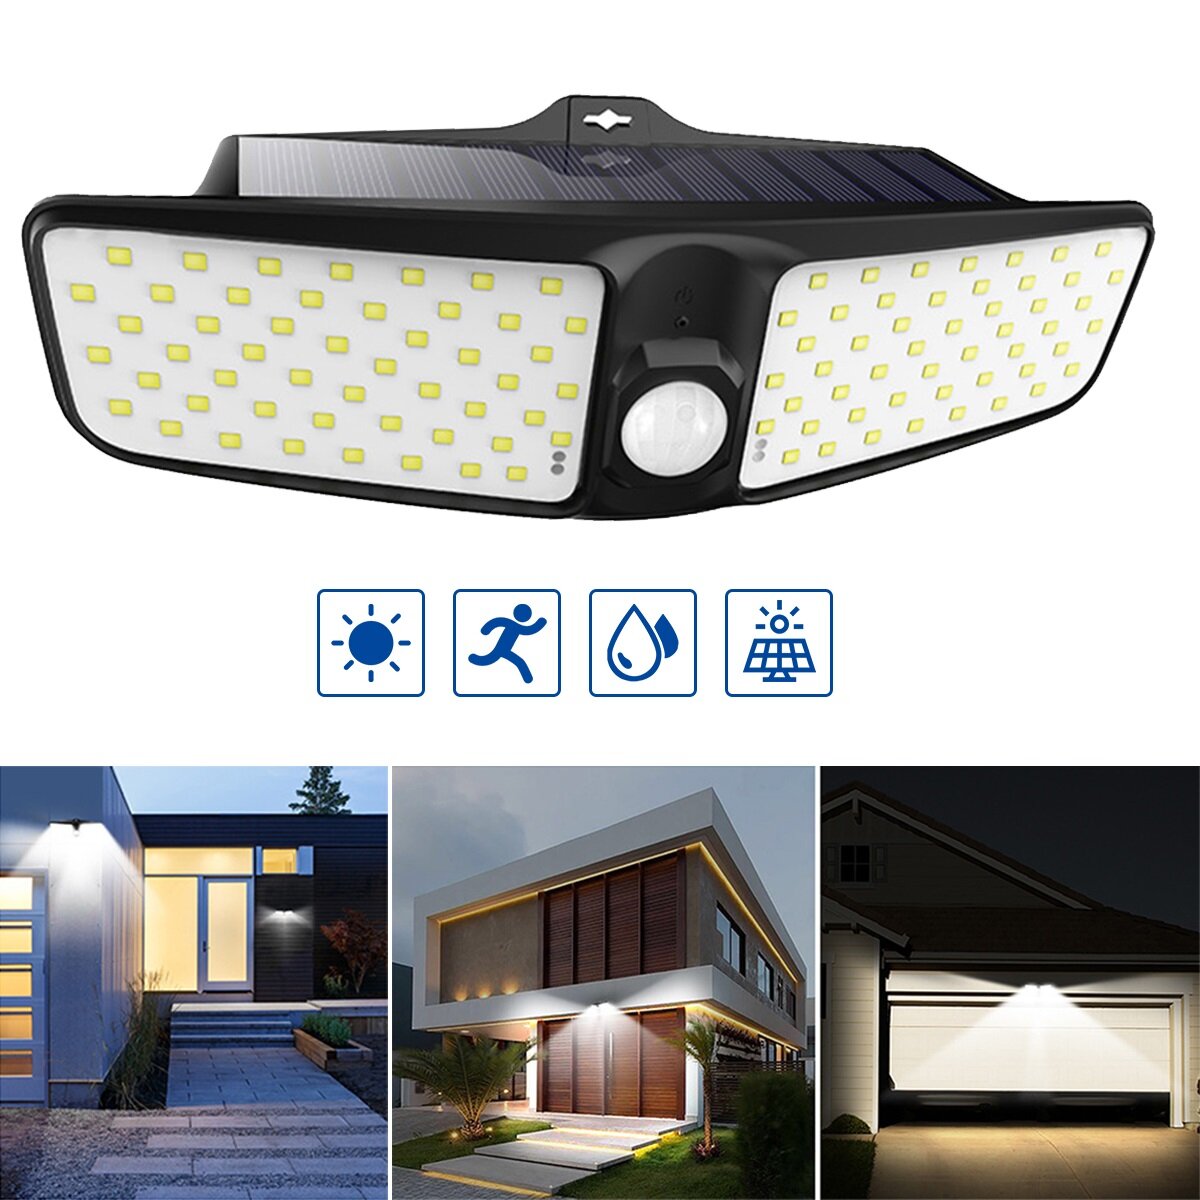 100LED Solar Wall Light Motion Sensor Security Street Lamp Outdoor IP65 Waterproof Decor